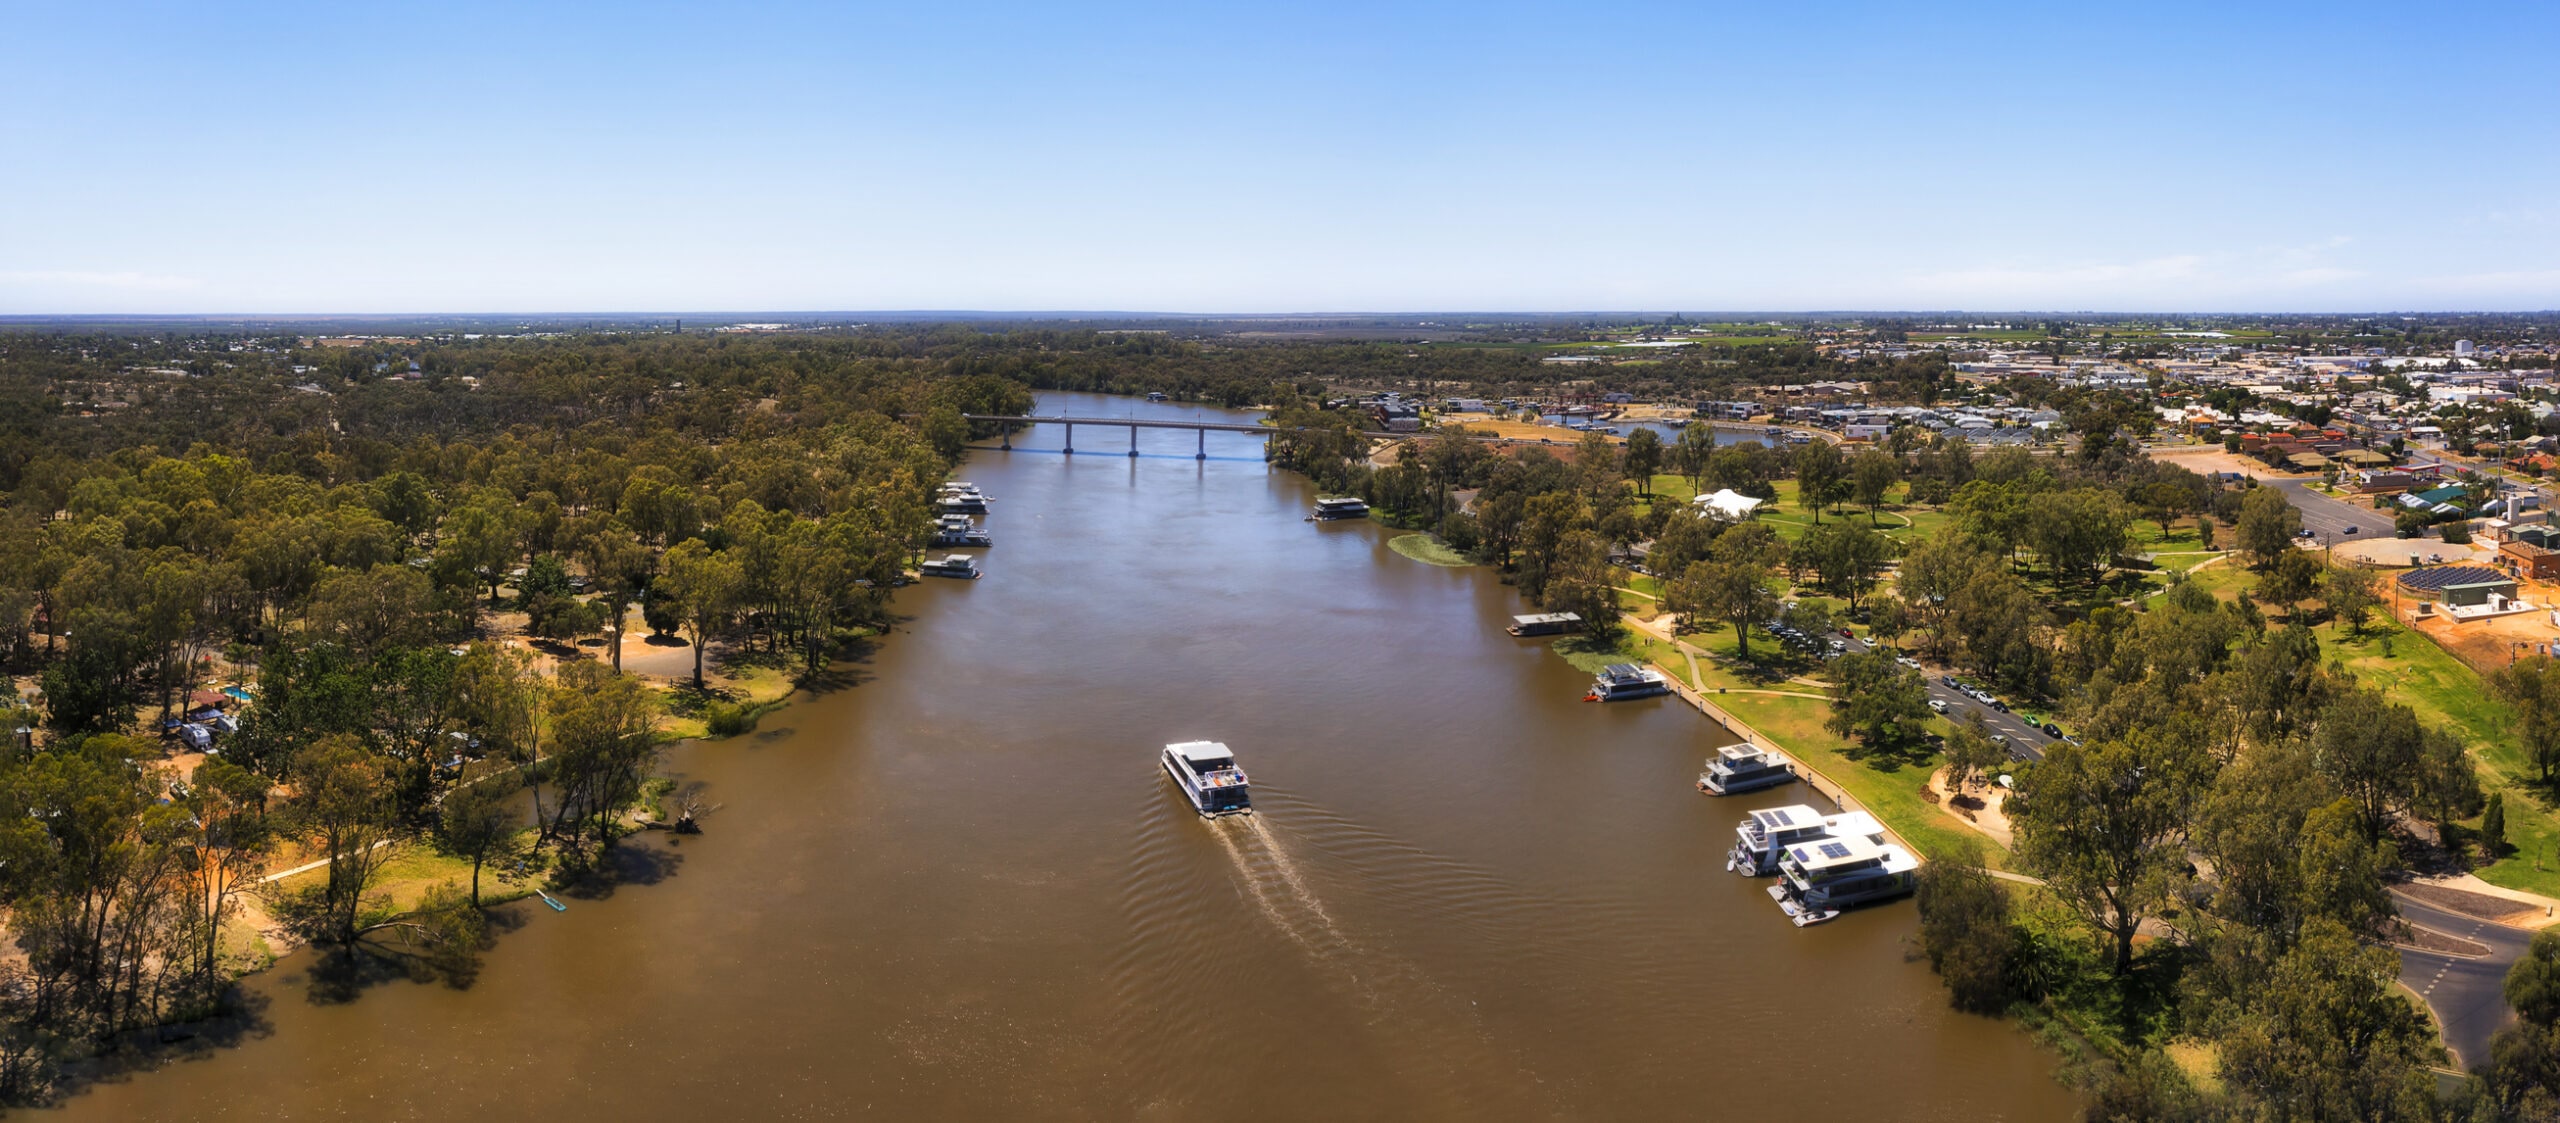 Wide Murray river at Mildura city of Australian Riverina in aerial panorama with cruise boat.